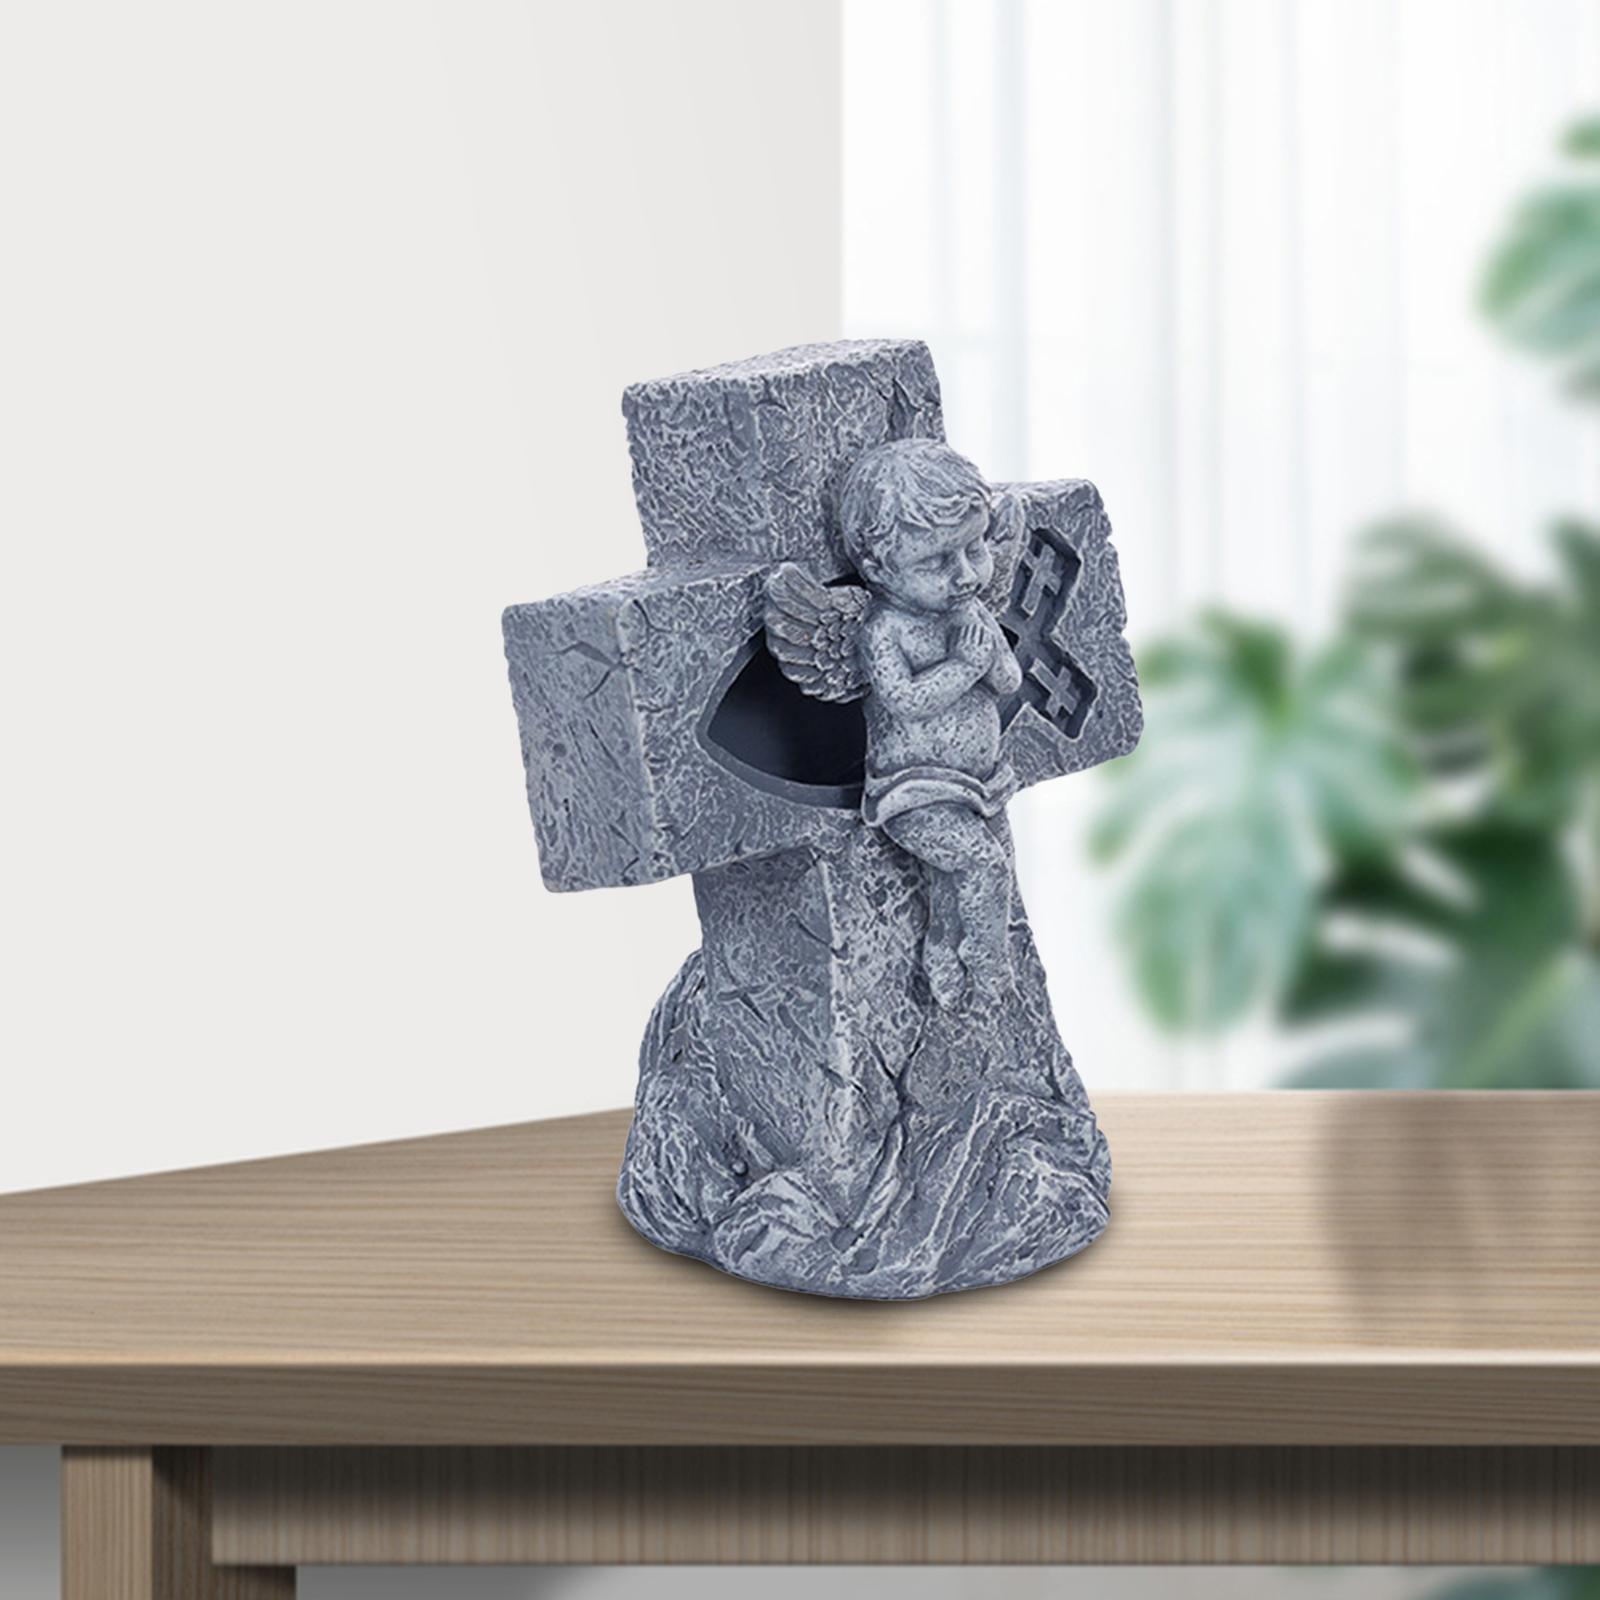 Cross Statues Figurine Art Sculpture Home Accent 9.5x6x11cm Gray